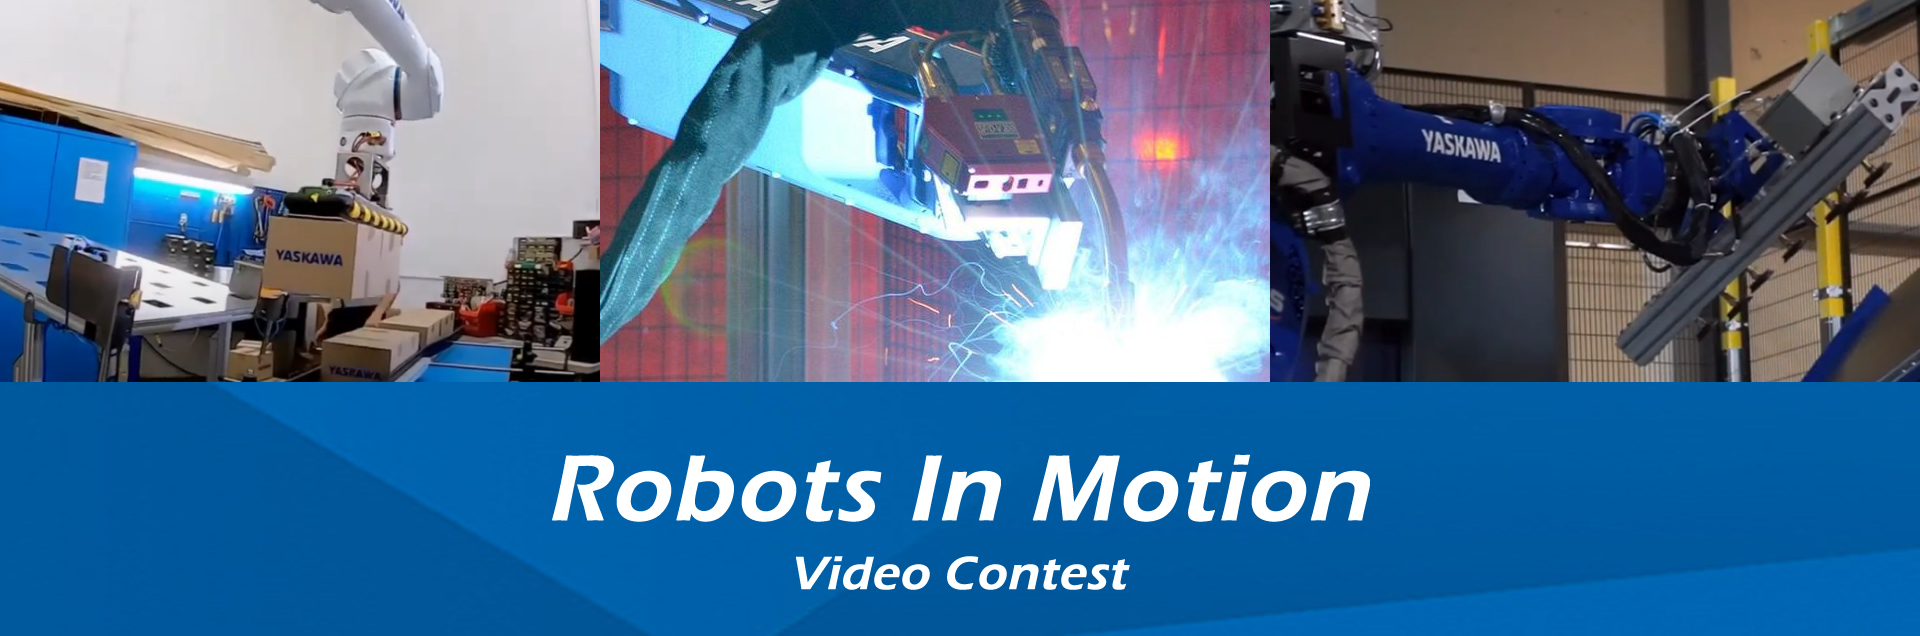 Yaskawa Motoman - Robots in Motion Video Contest